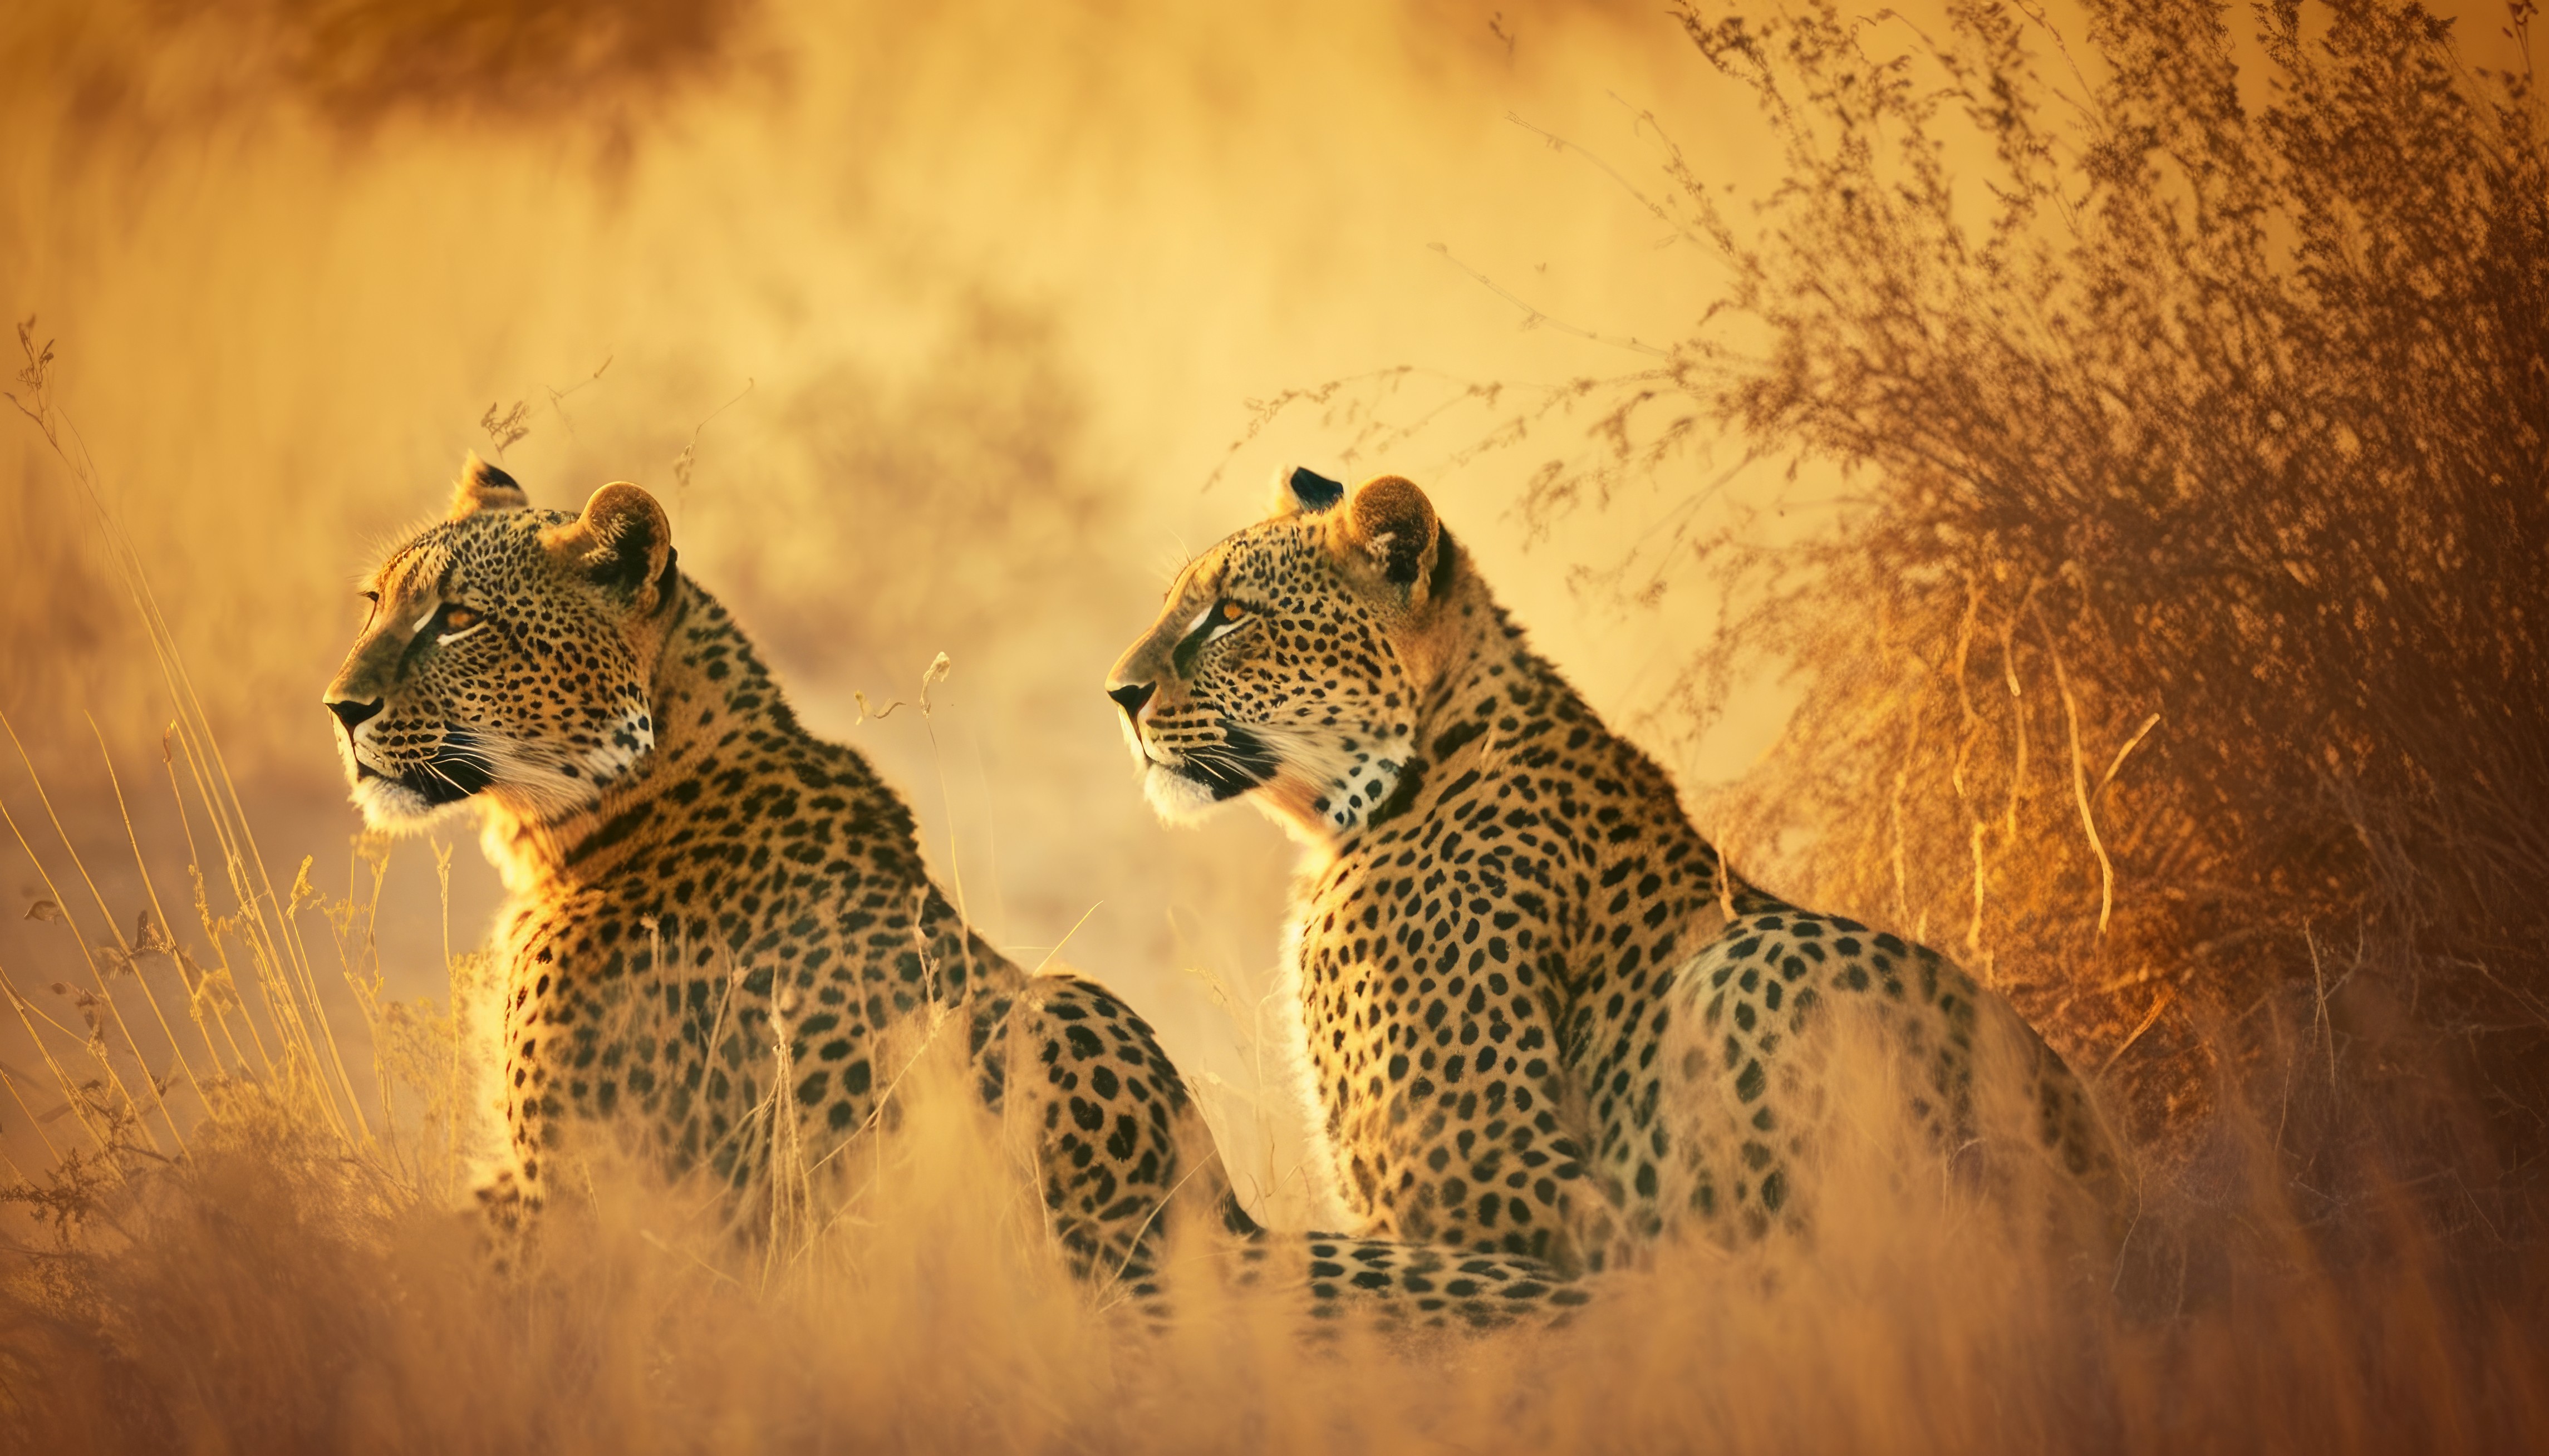 General 4579x2616 AI art leopard savannah Africa animals nature